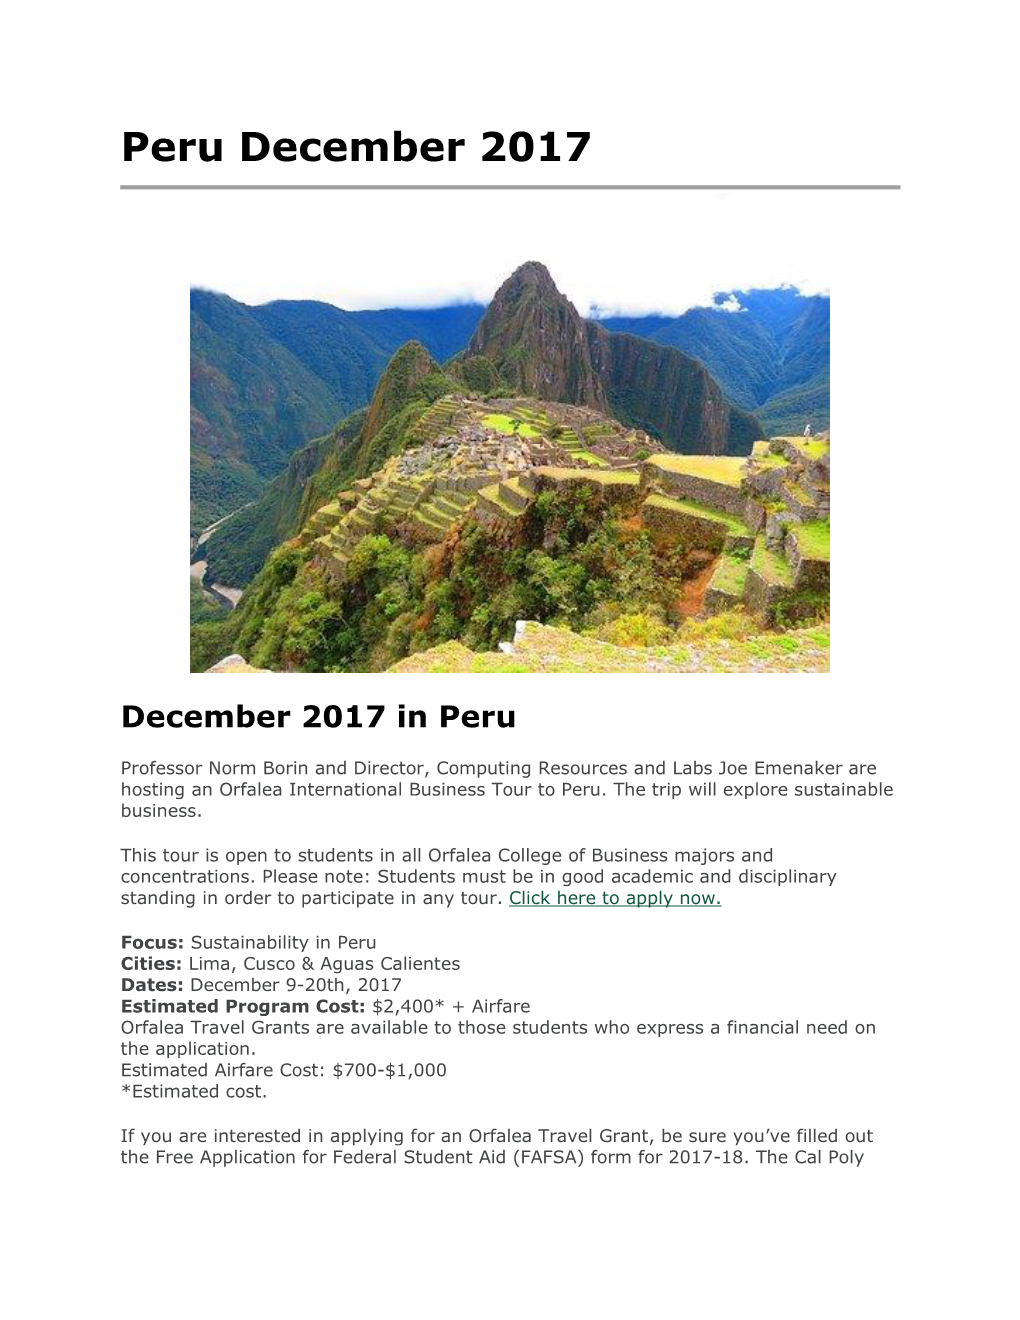 Peru International Business Tour